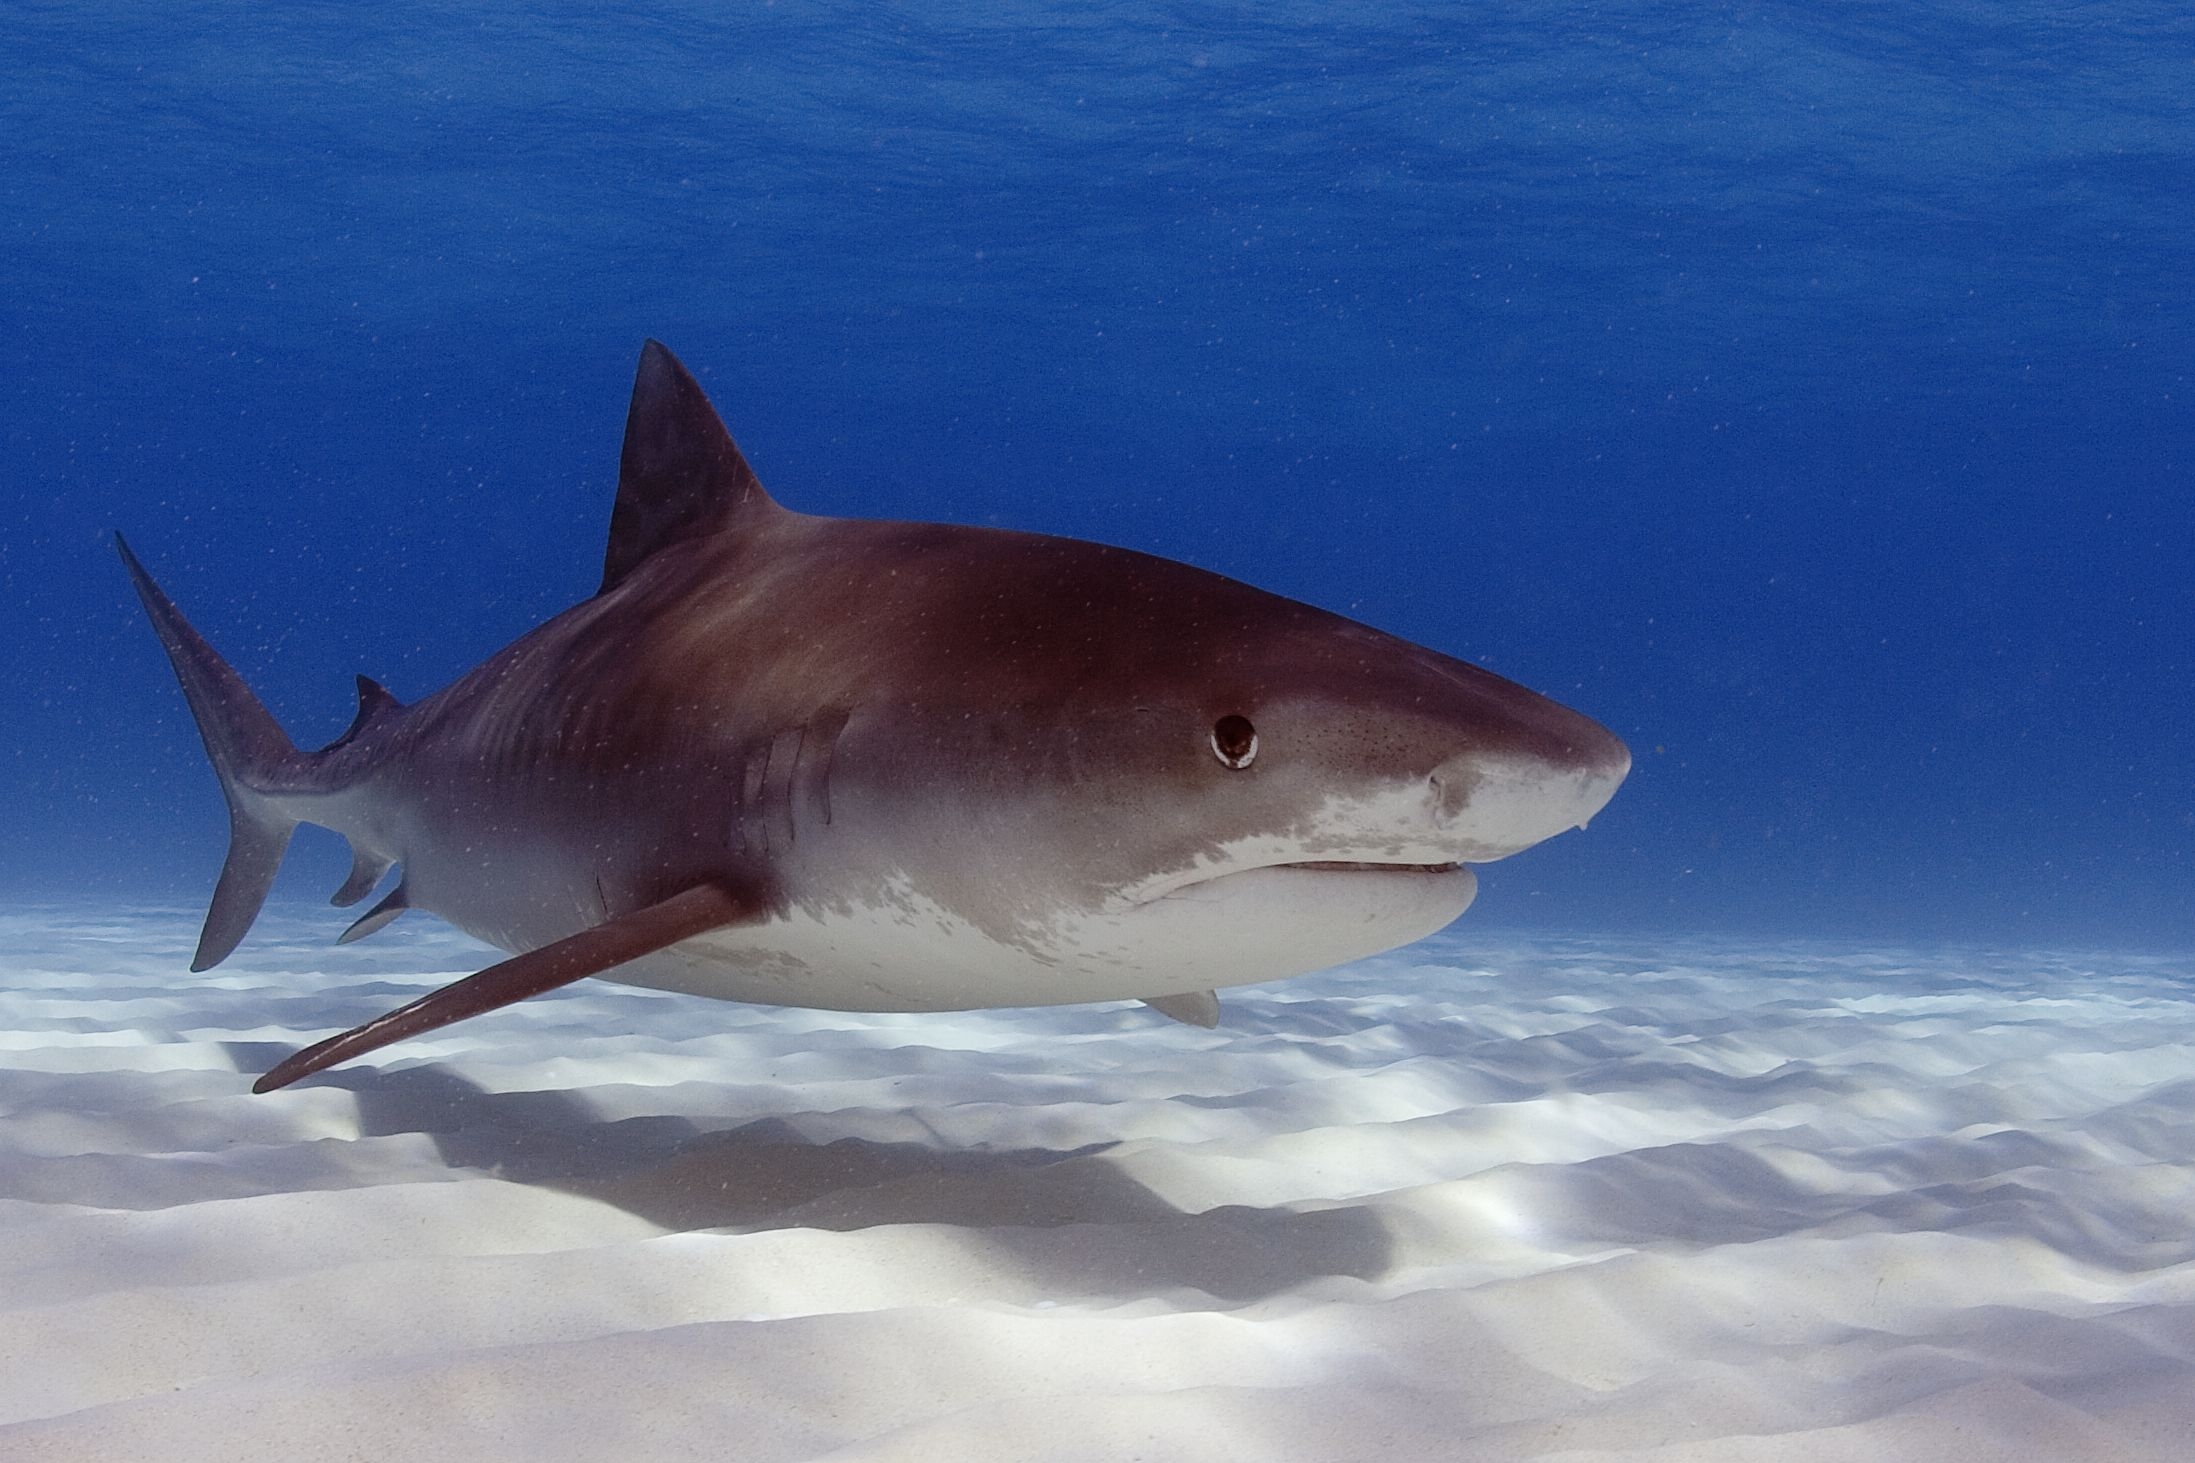  Tiger Shark Facts and Information - Galeocerdo